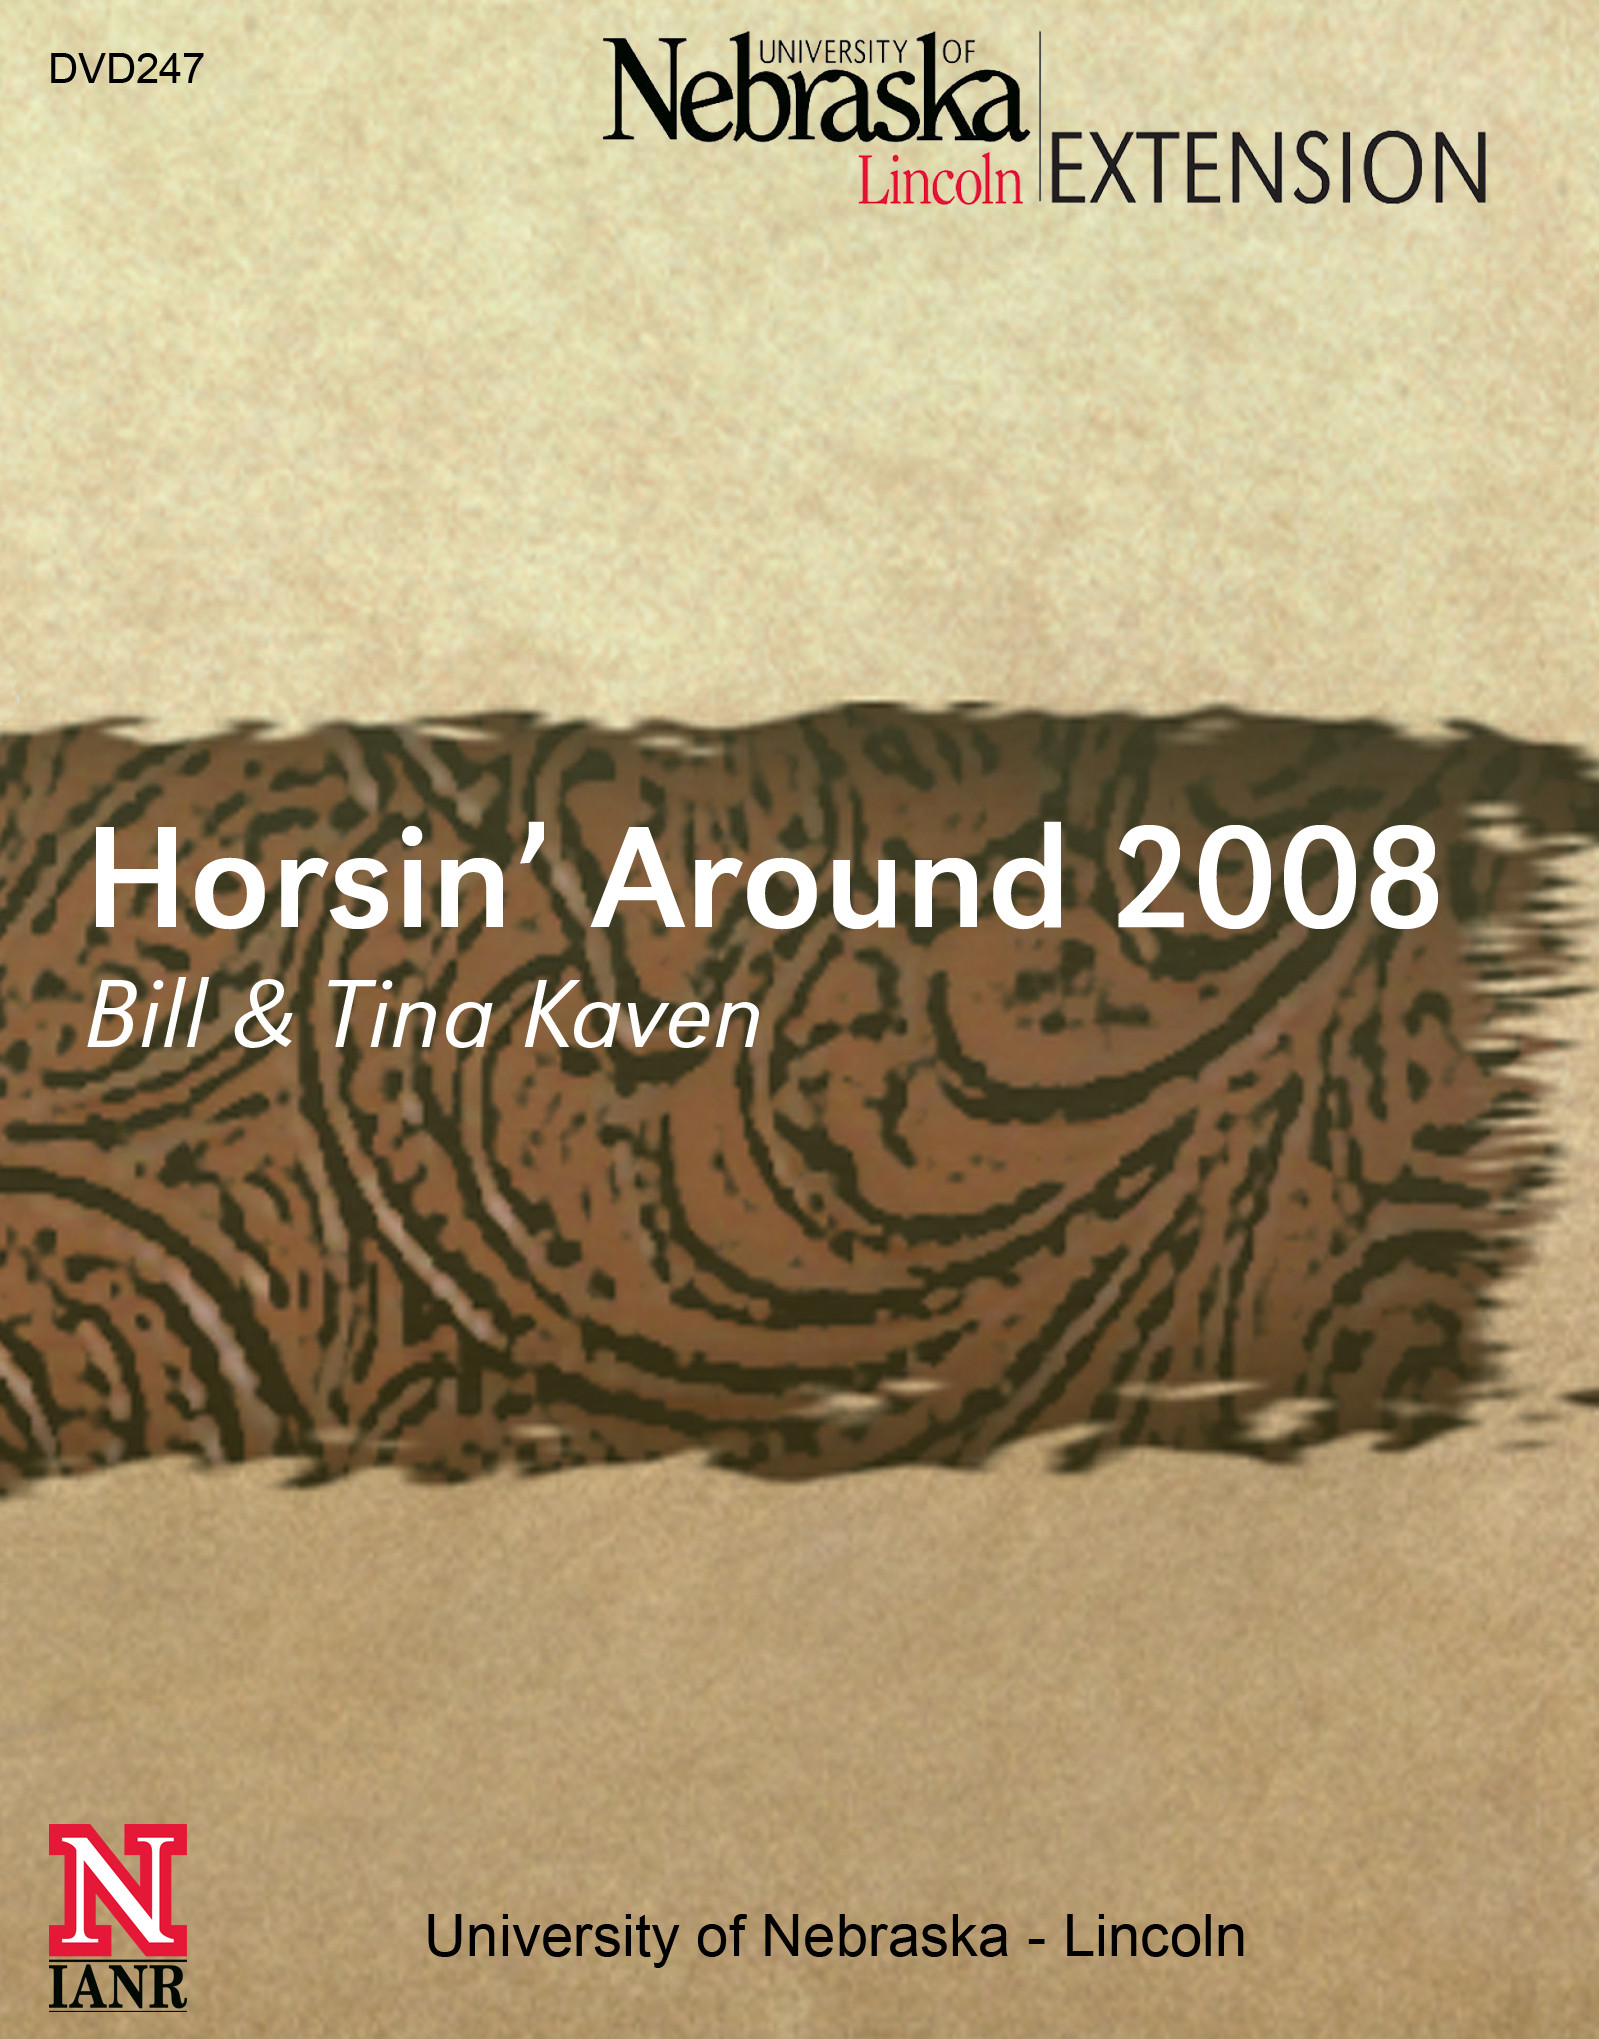 Horsin' Around 2008 [DVD]